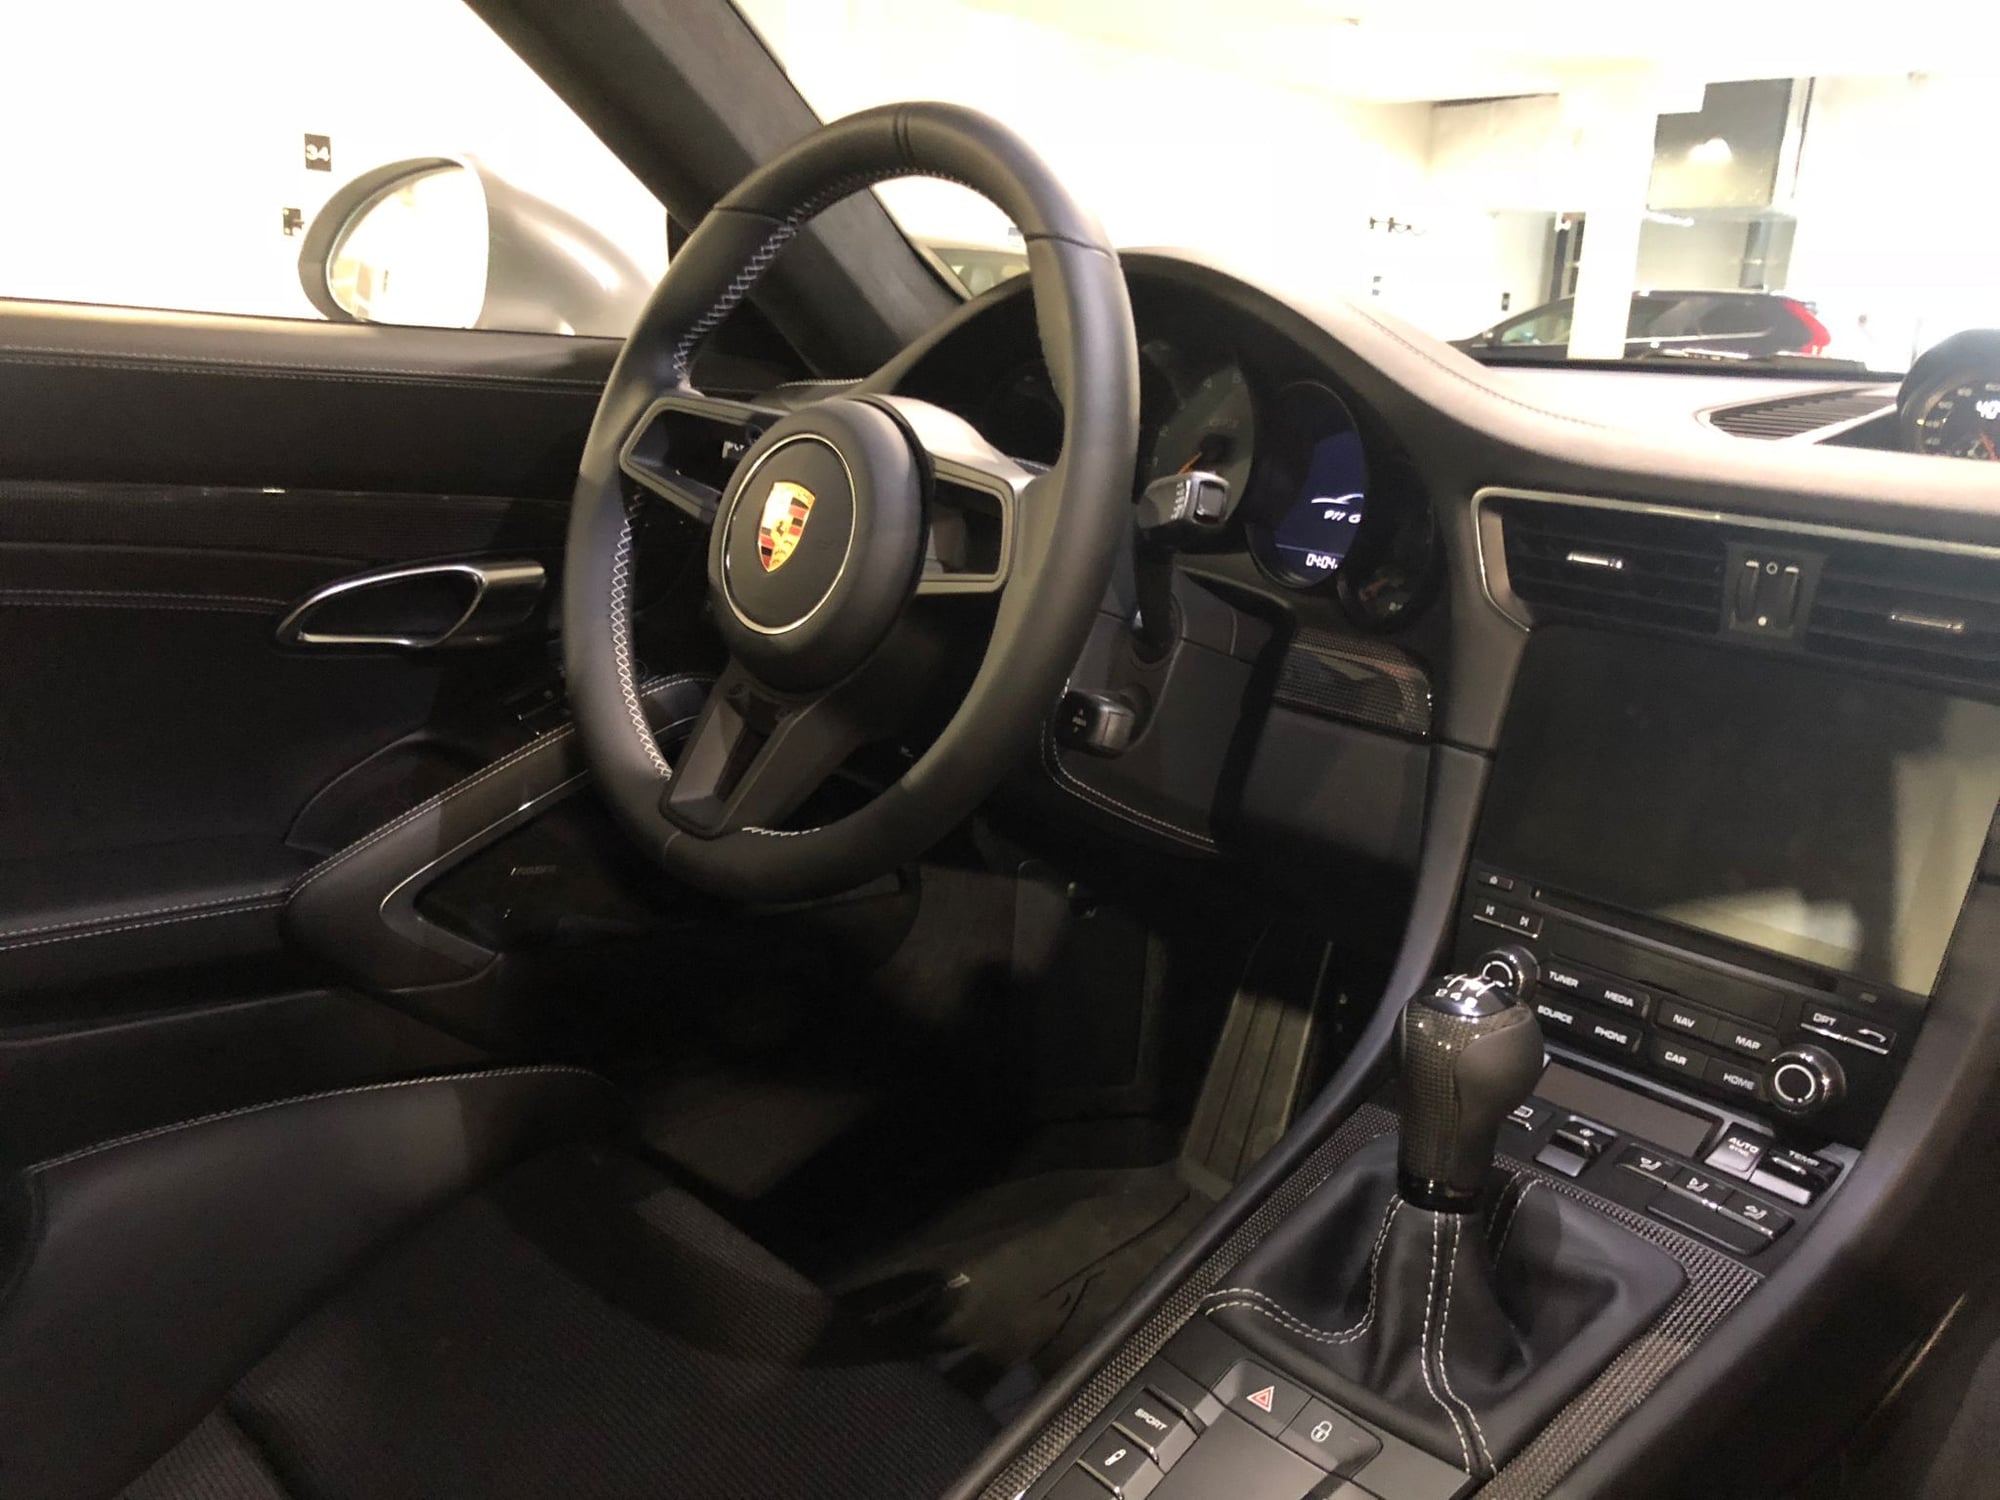 Interior/Upholstery - 911R Carbon Fiber Shift Knob - Used - 2012 to 2019 Porsche 911 - Boston, MA 02115, United States